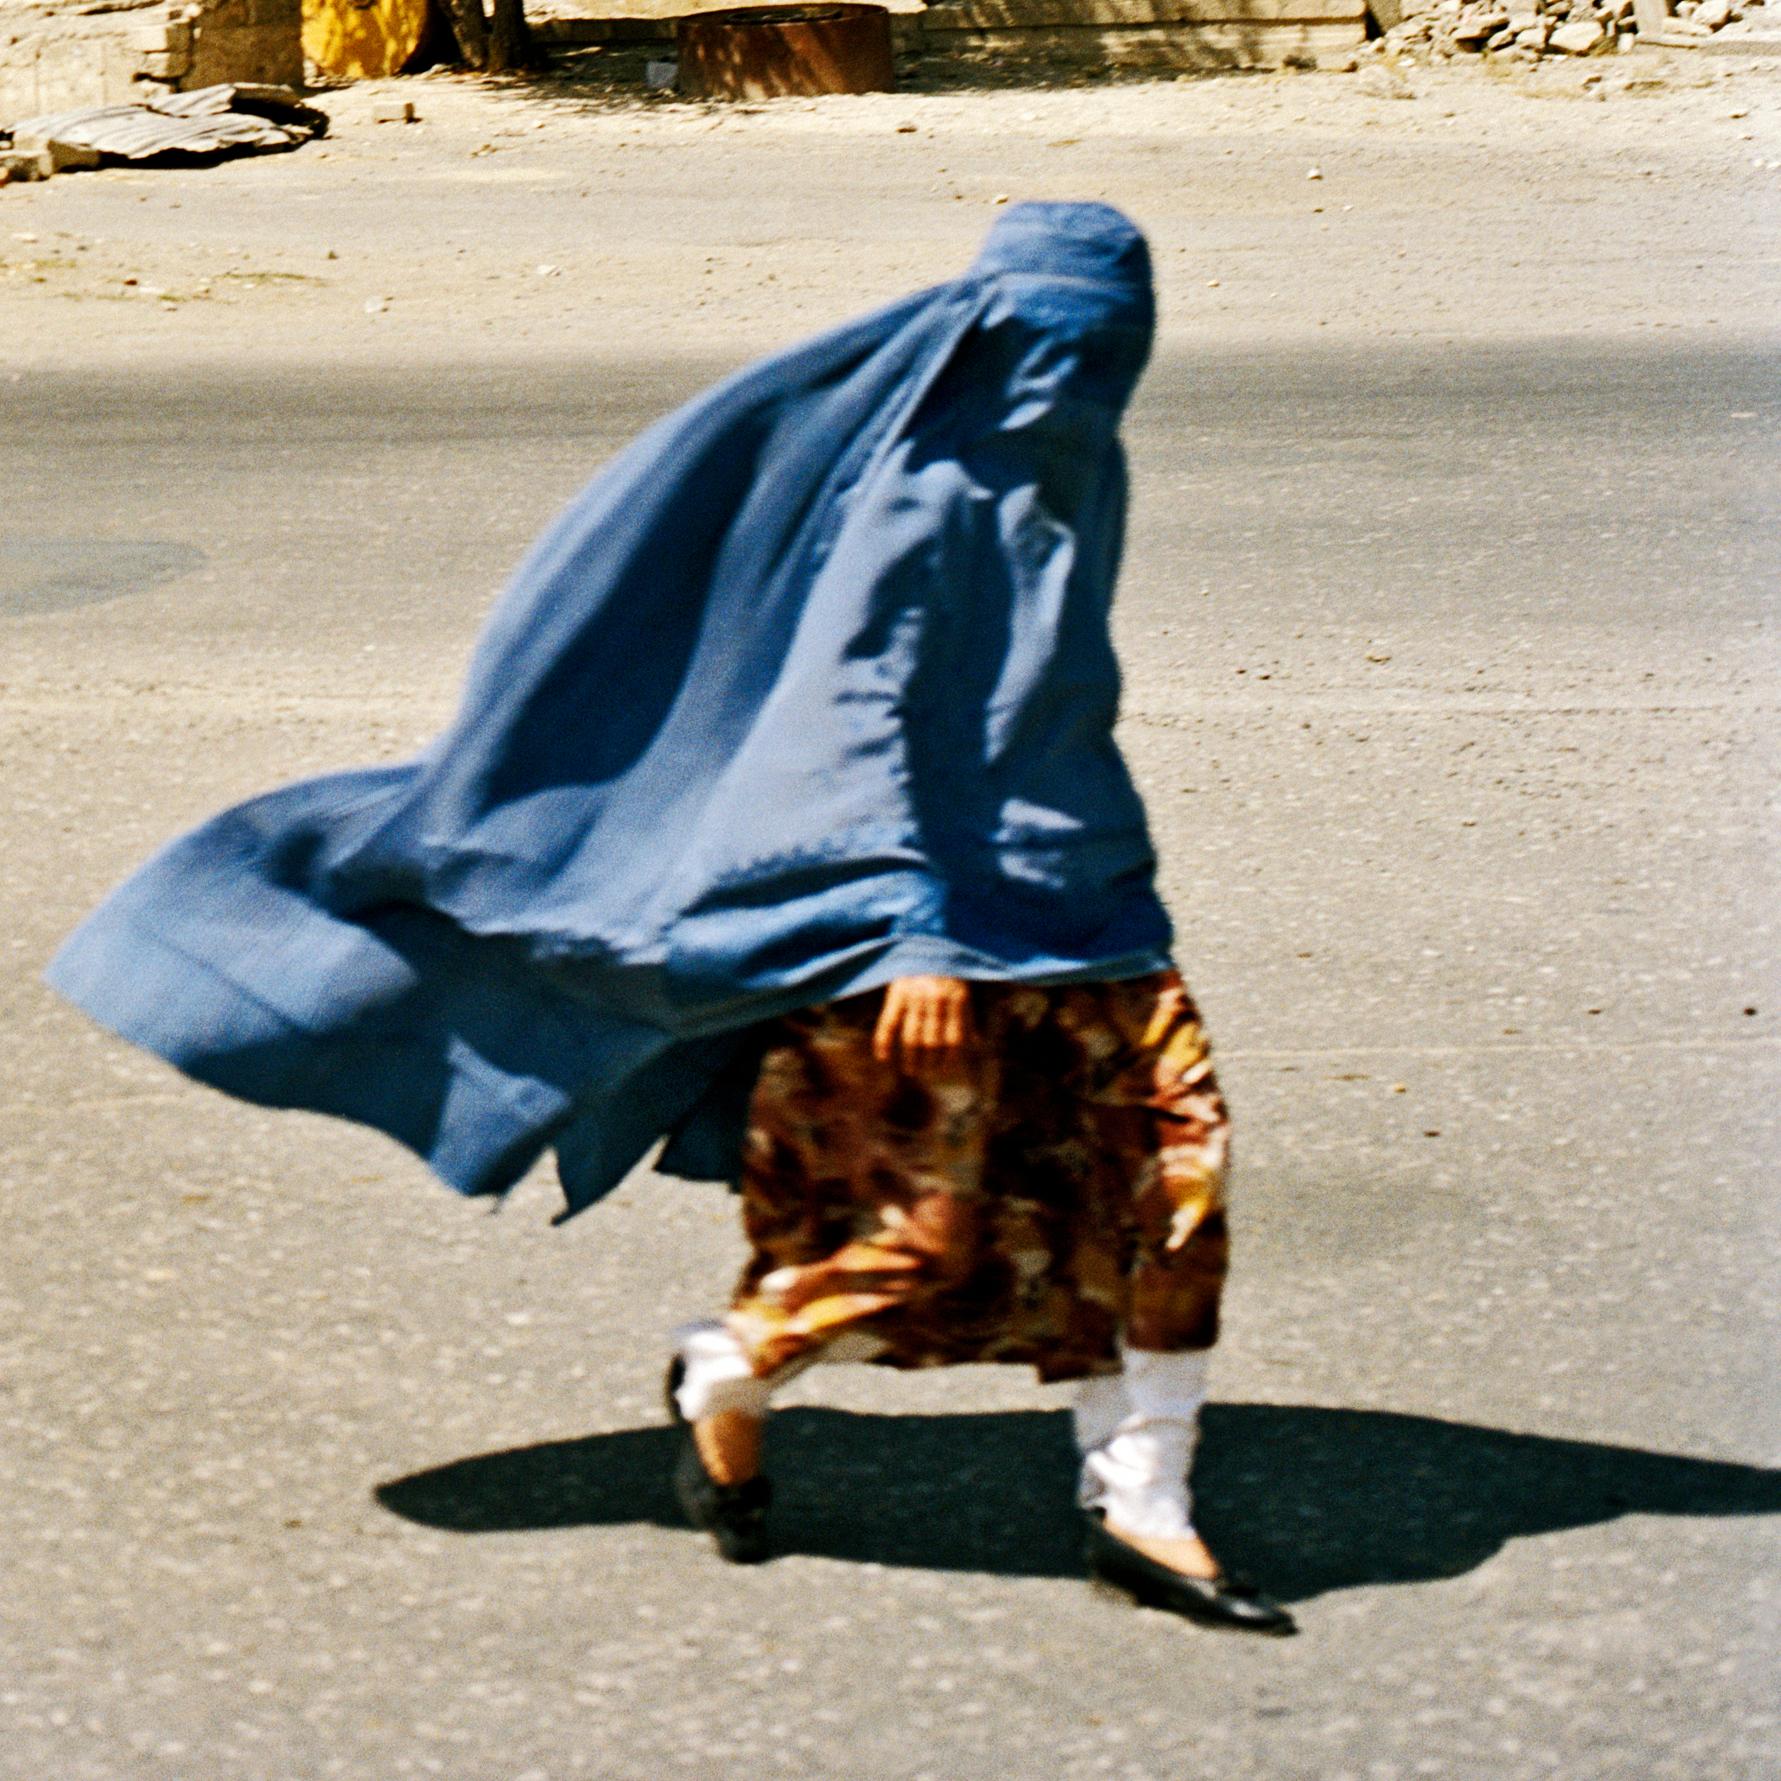 au palais de Darulaman, Kaboul, août 2003 - Photograph de Jonathan Becker